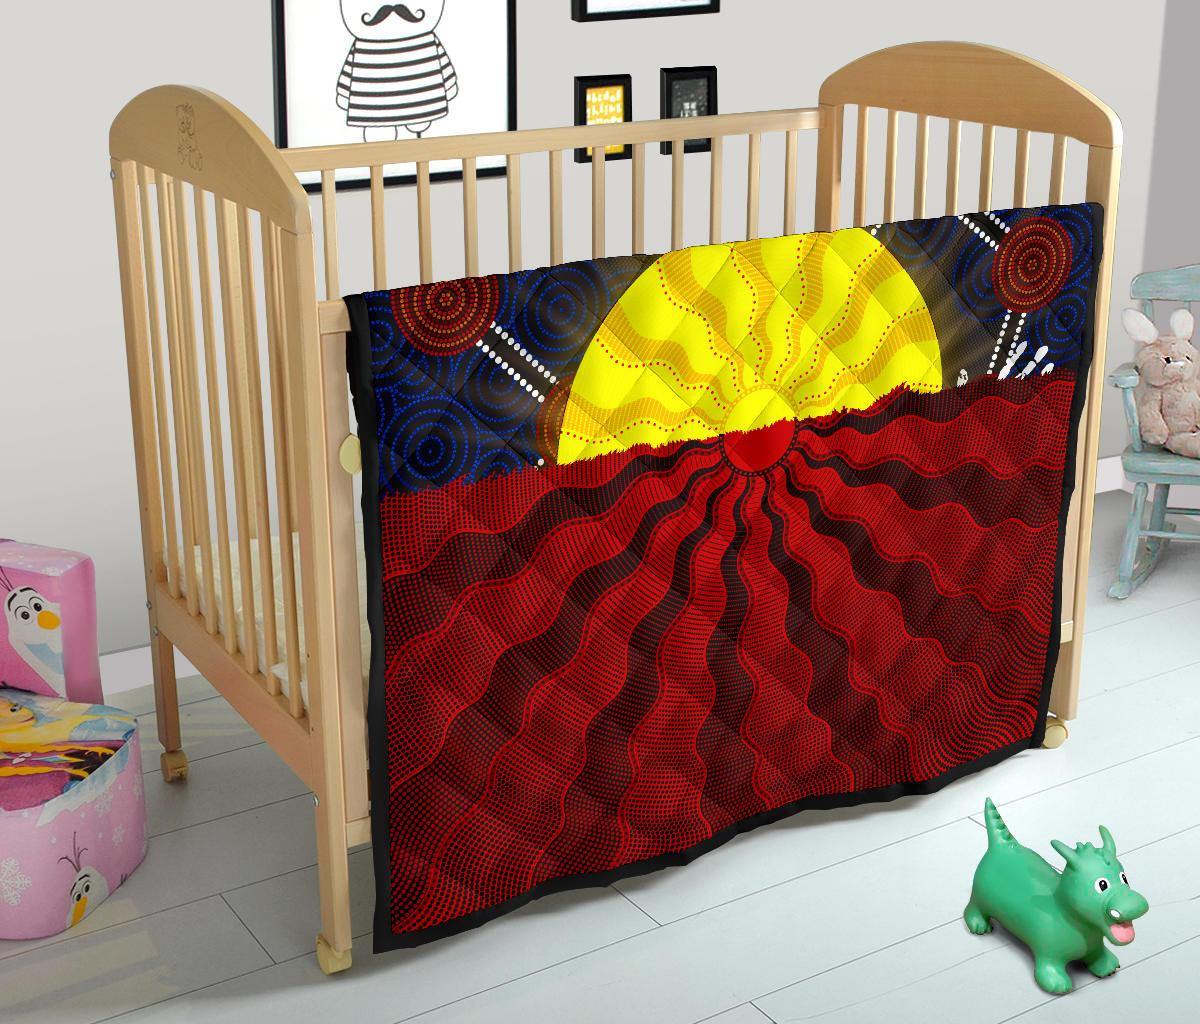 aboriginal-premium-quilt-aboriginal-lives-matter-flag-sun-dot-painting